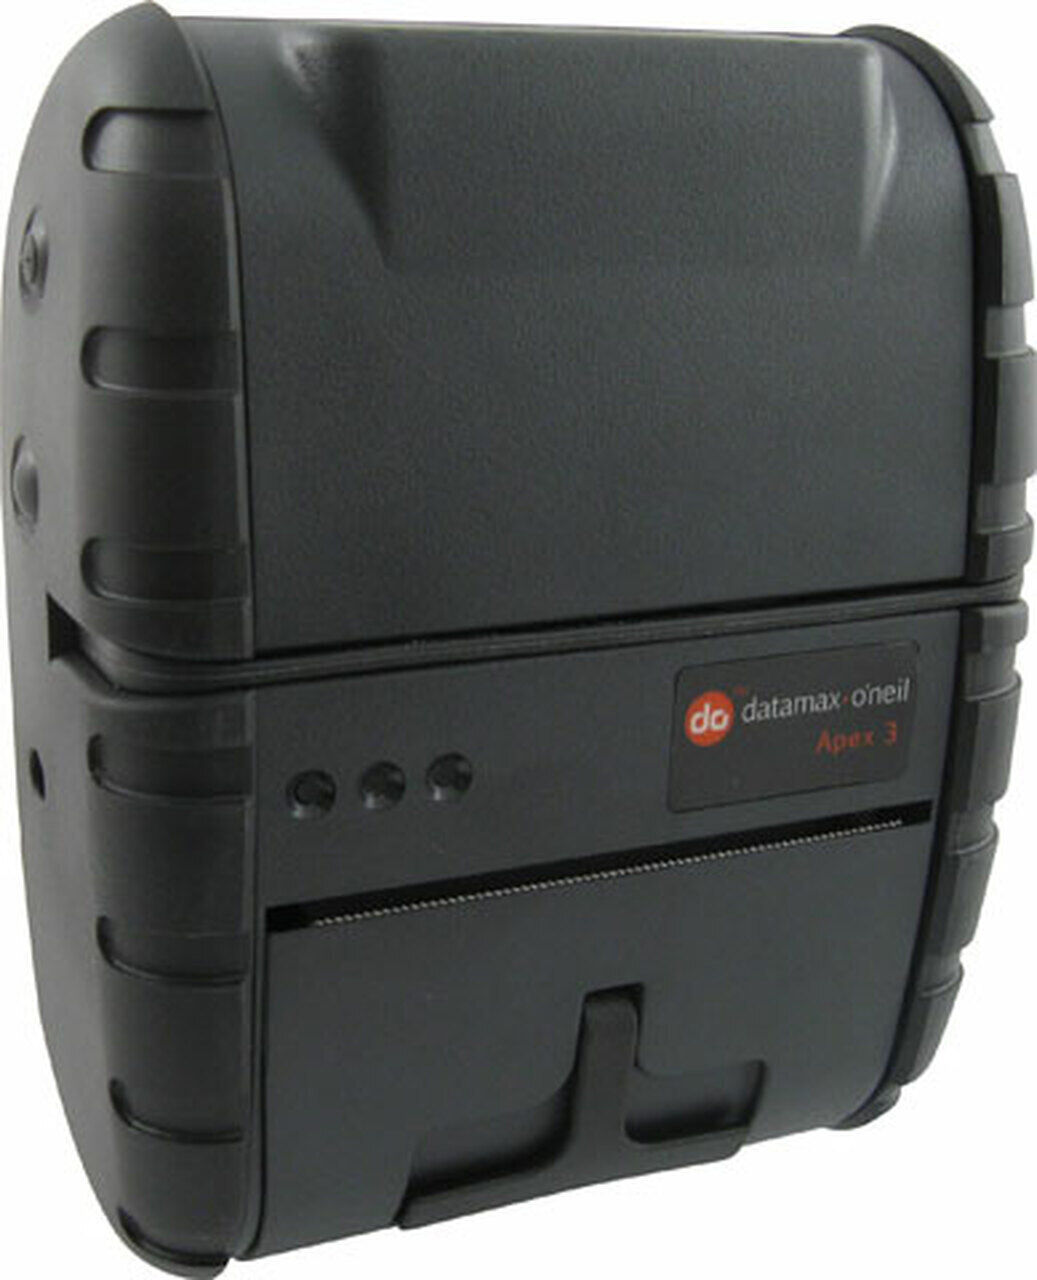 Datamax-O'Neil Apex 3 Portable Barcode printer (78828S1-3)